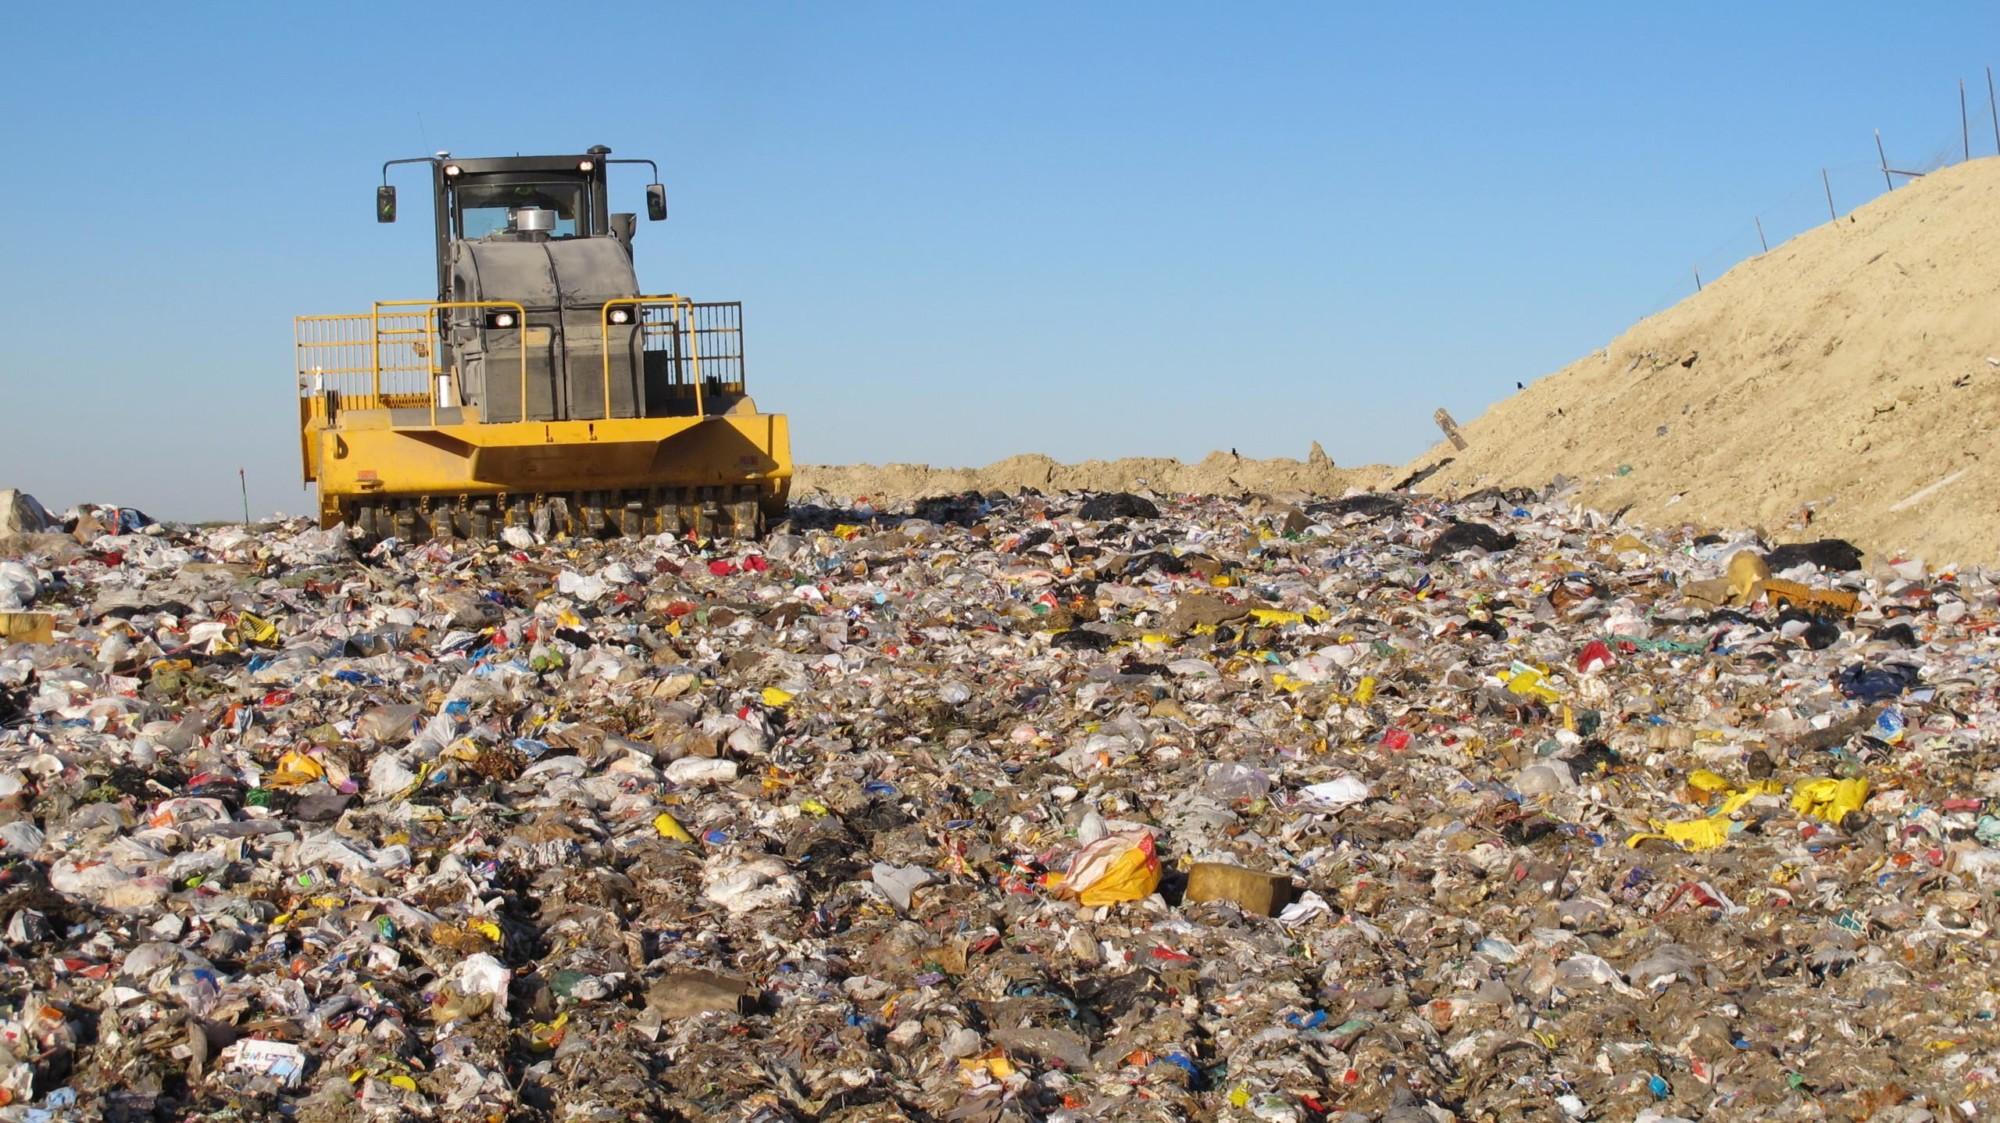 TANA E520 landfill compactor Optimum compaction rate increases the landfill’s capacity